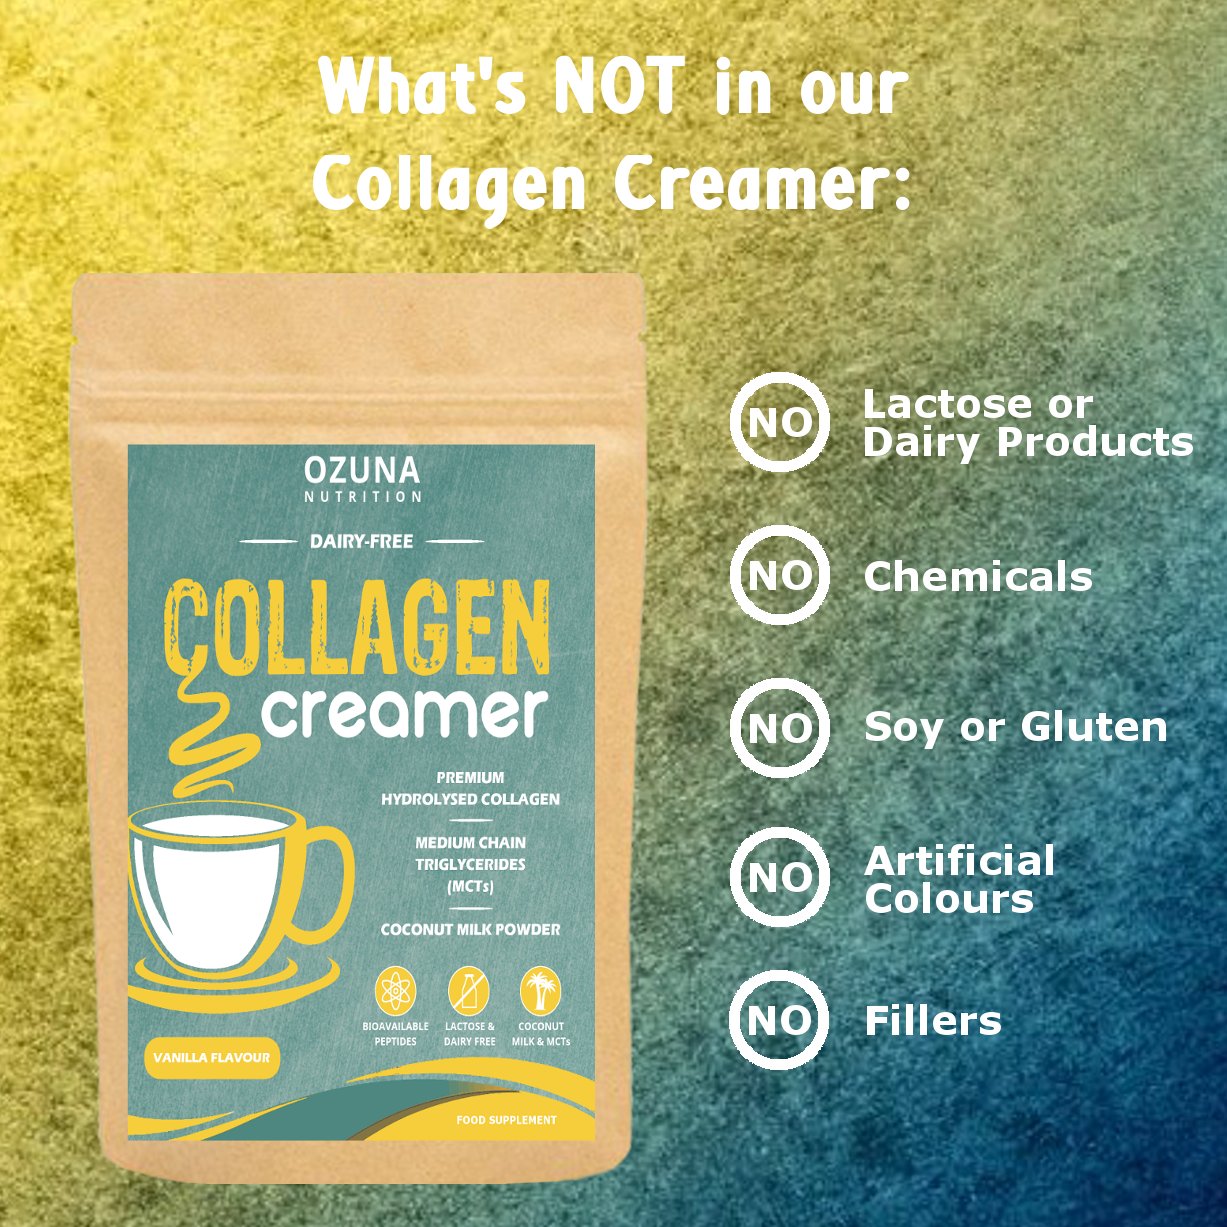 Instant Keto Coffee & Collagen Creamer Bundle